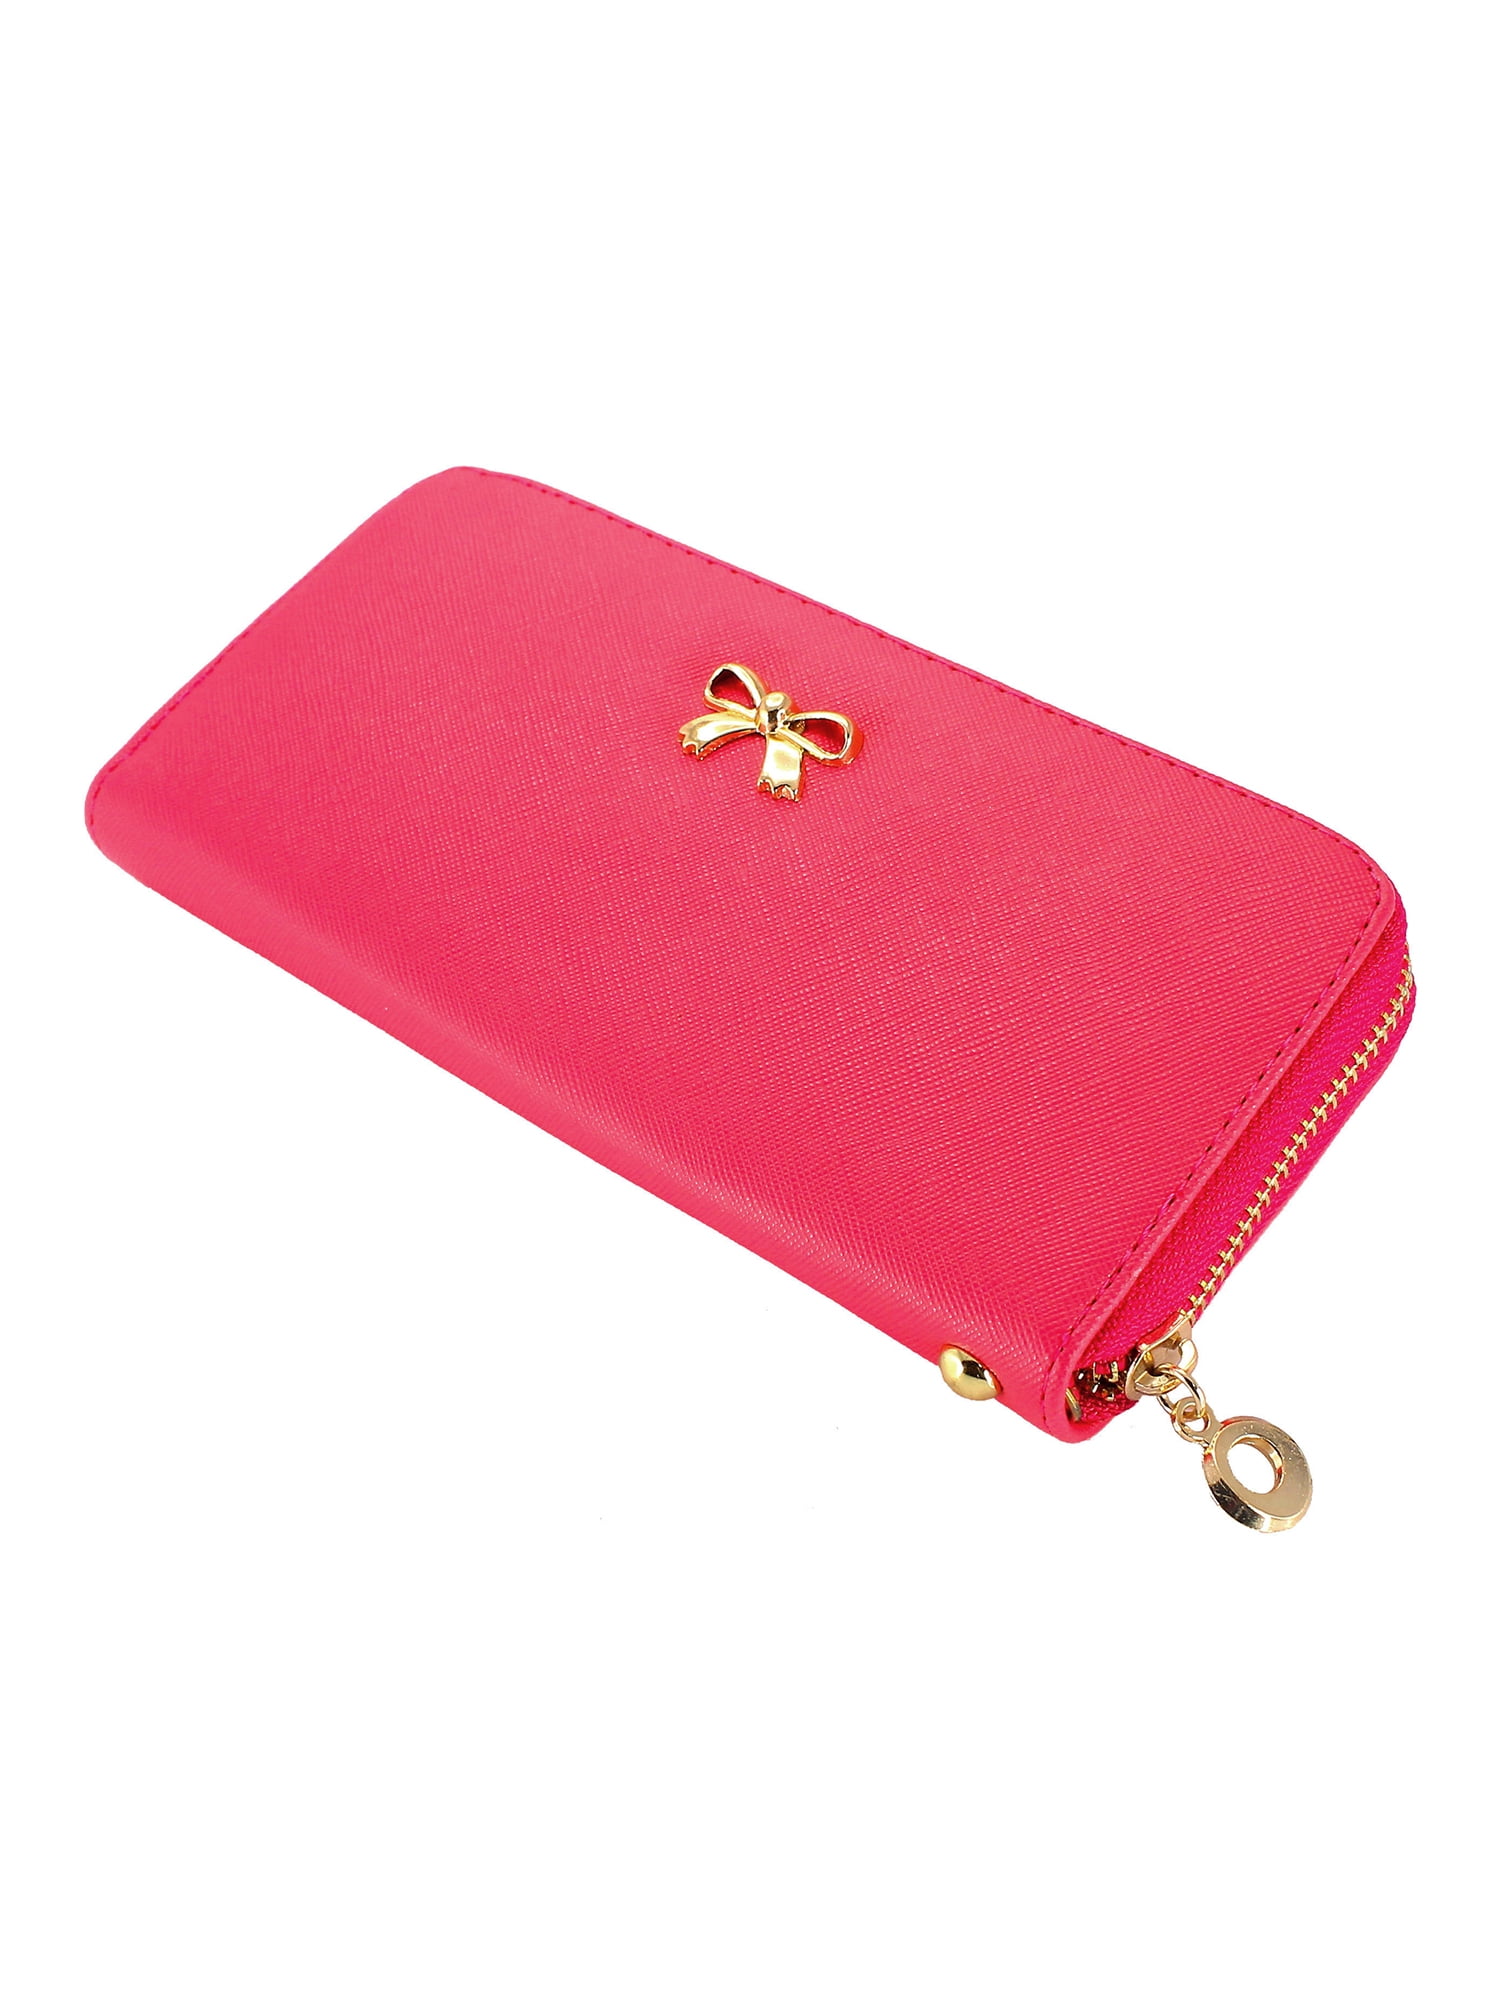 Fashion Lady Women Leather Clutch Wallet Zip Long Card Holder Case Purse Handbag